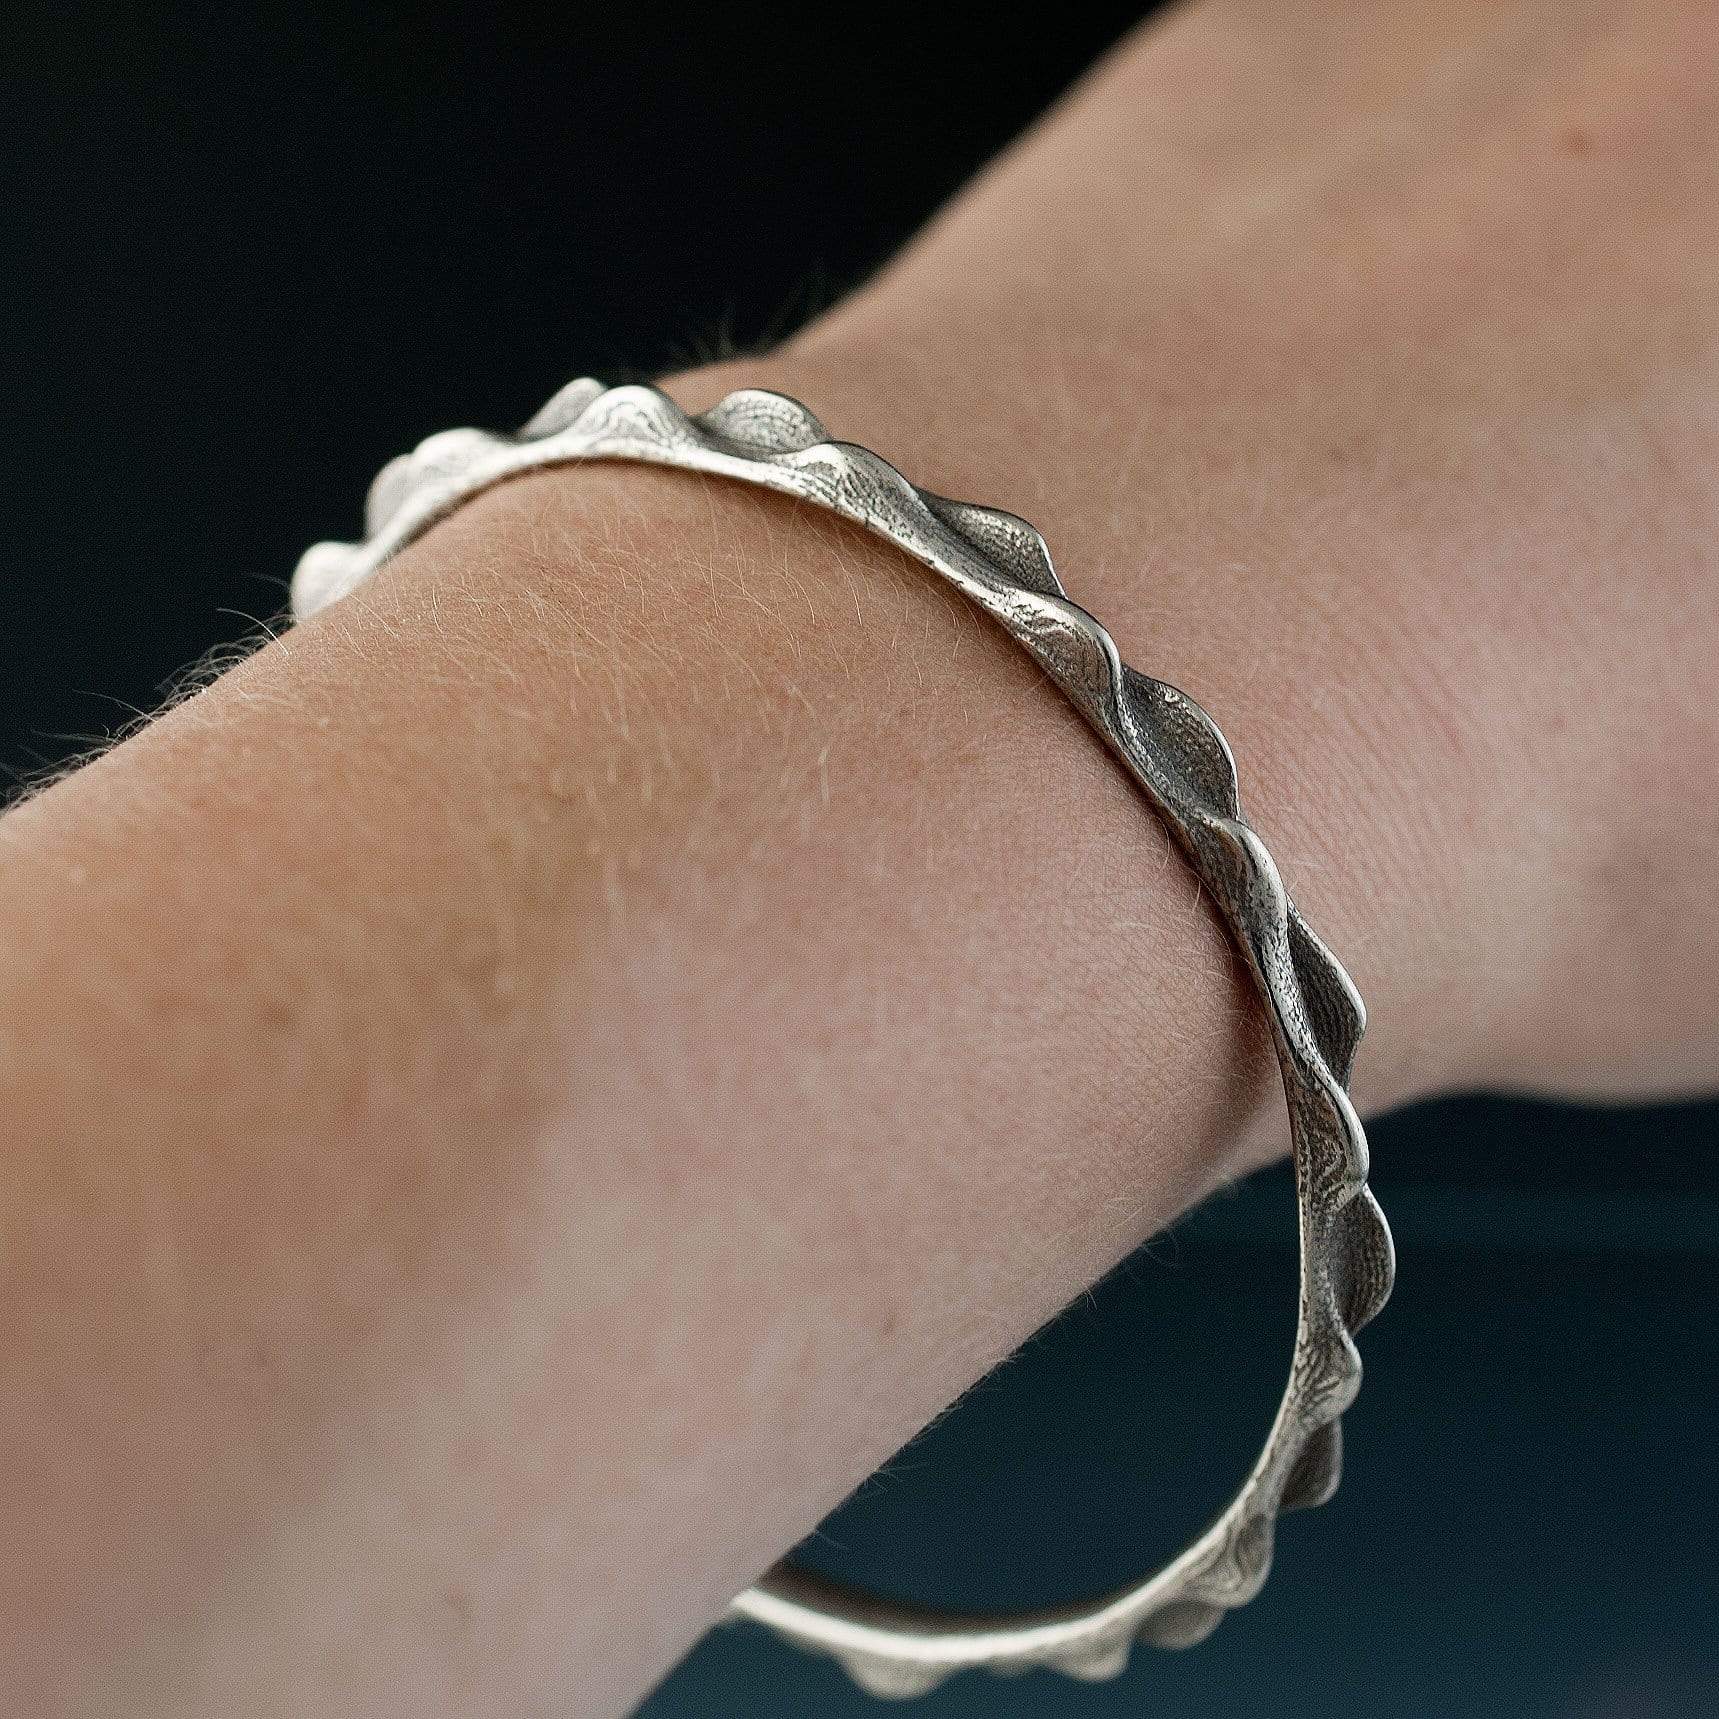 Bumpy Stainless Steel Bracelet Bangle 3D Printed Design, Ready to Ship Bracelet by Nodeform